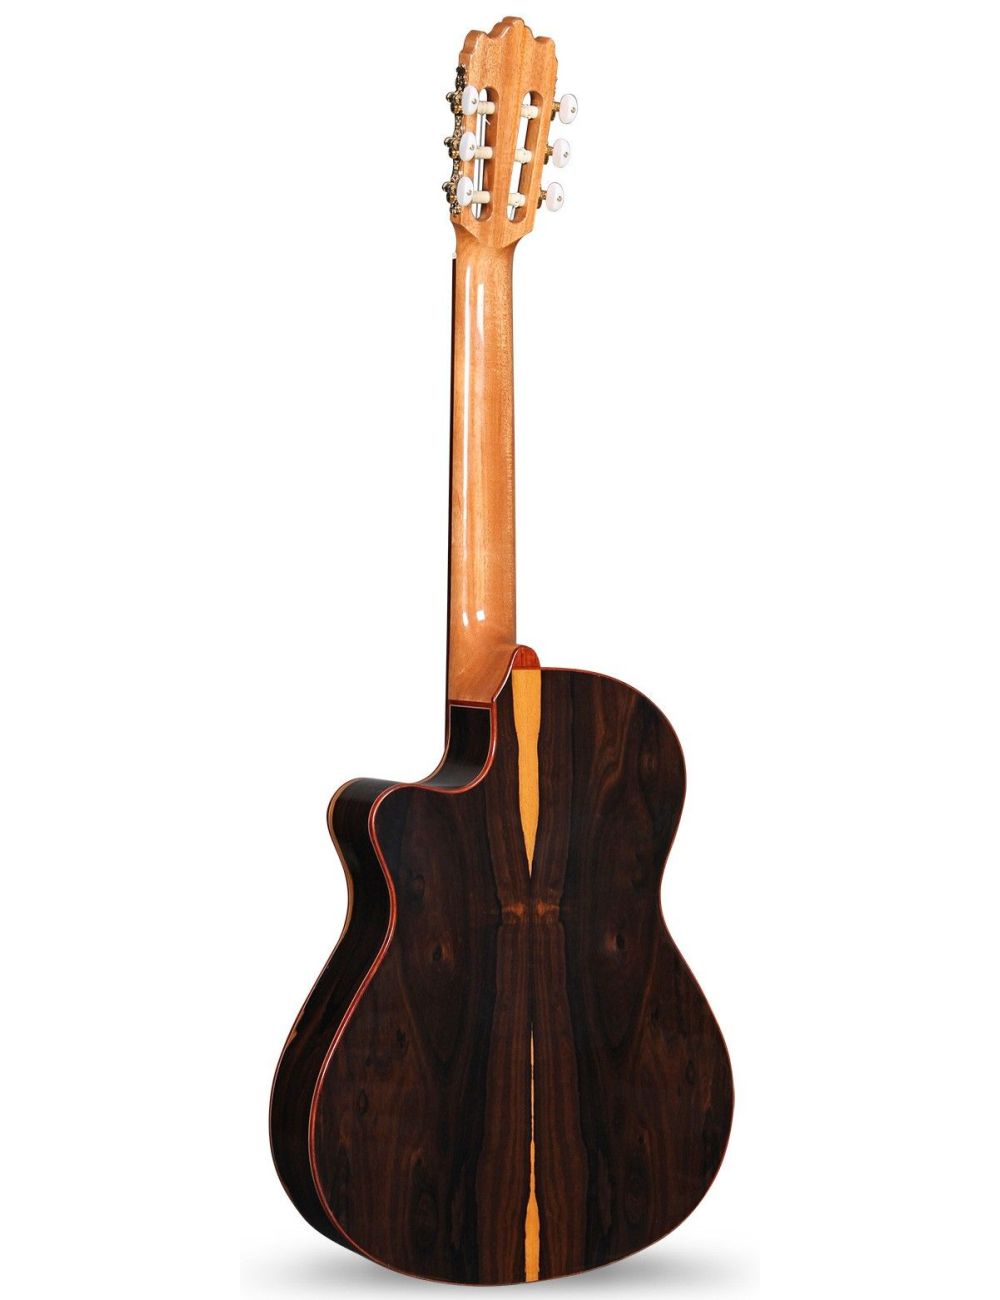 Alhambra Iberia Ziricote CTW E8 Guitarra Electro-clásica Caja estrecha